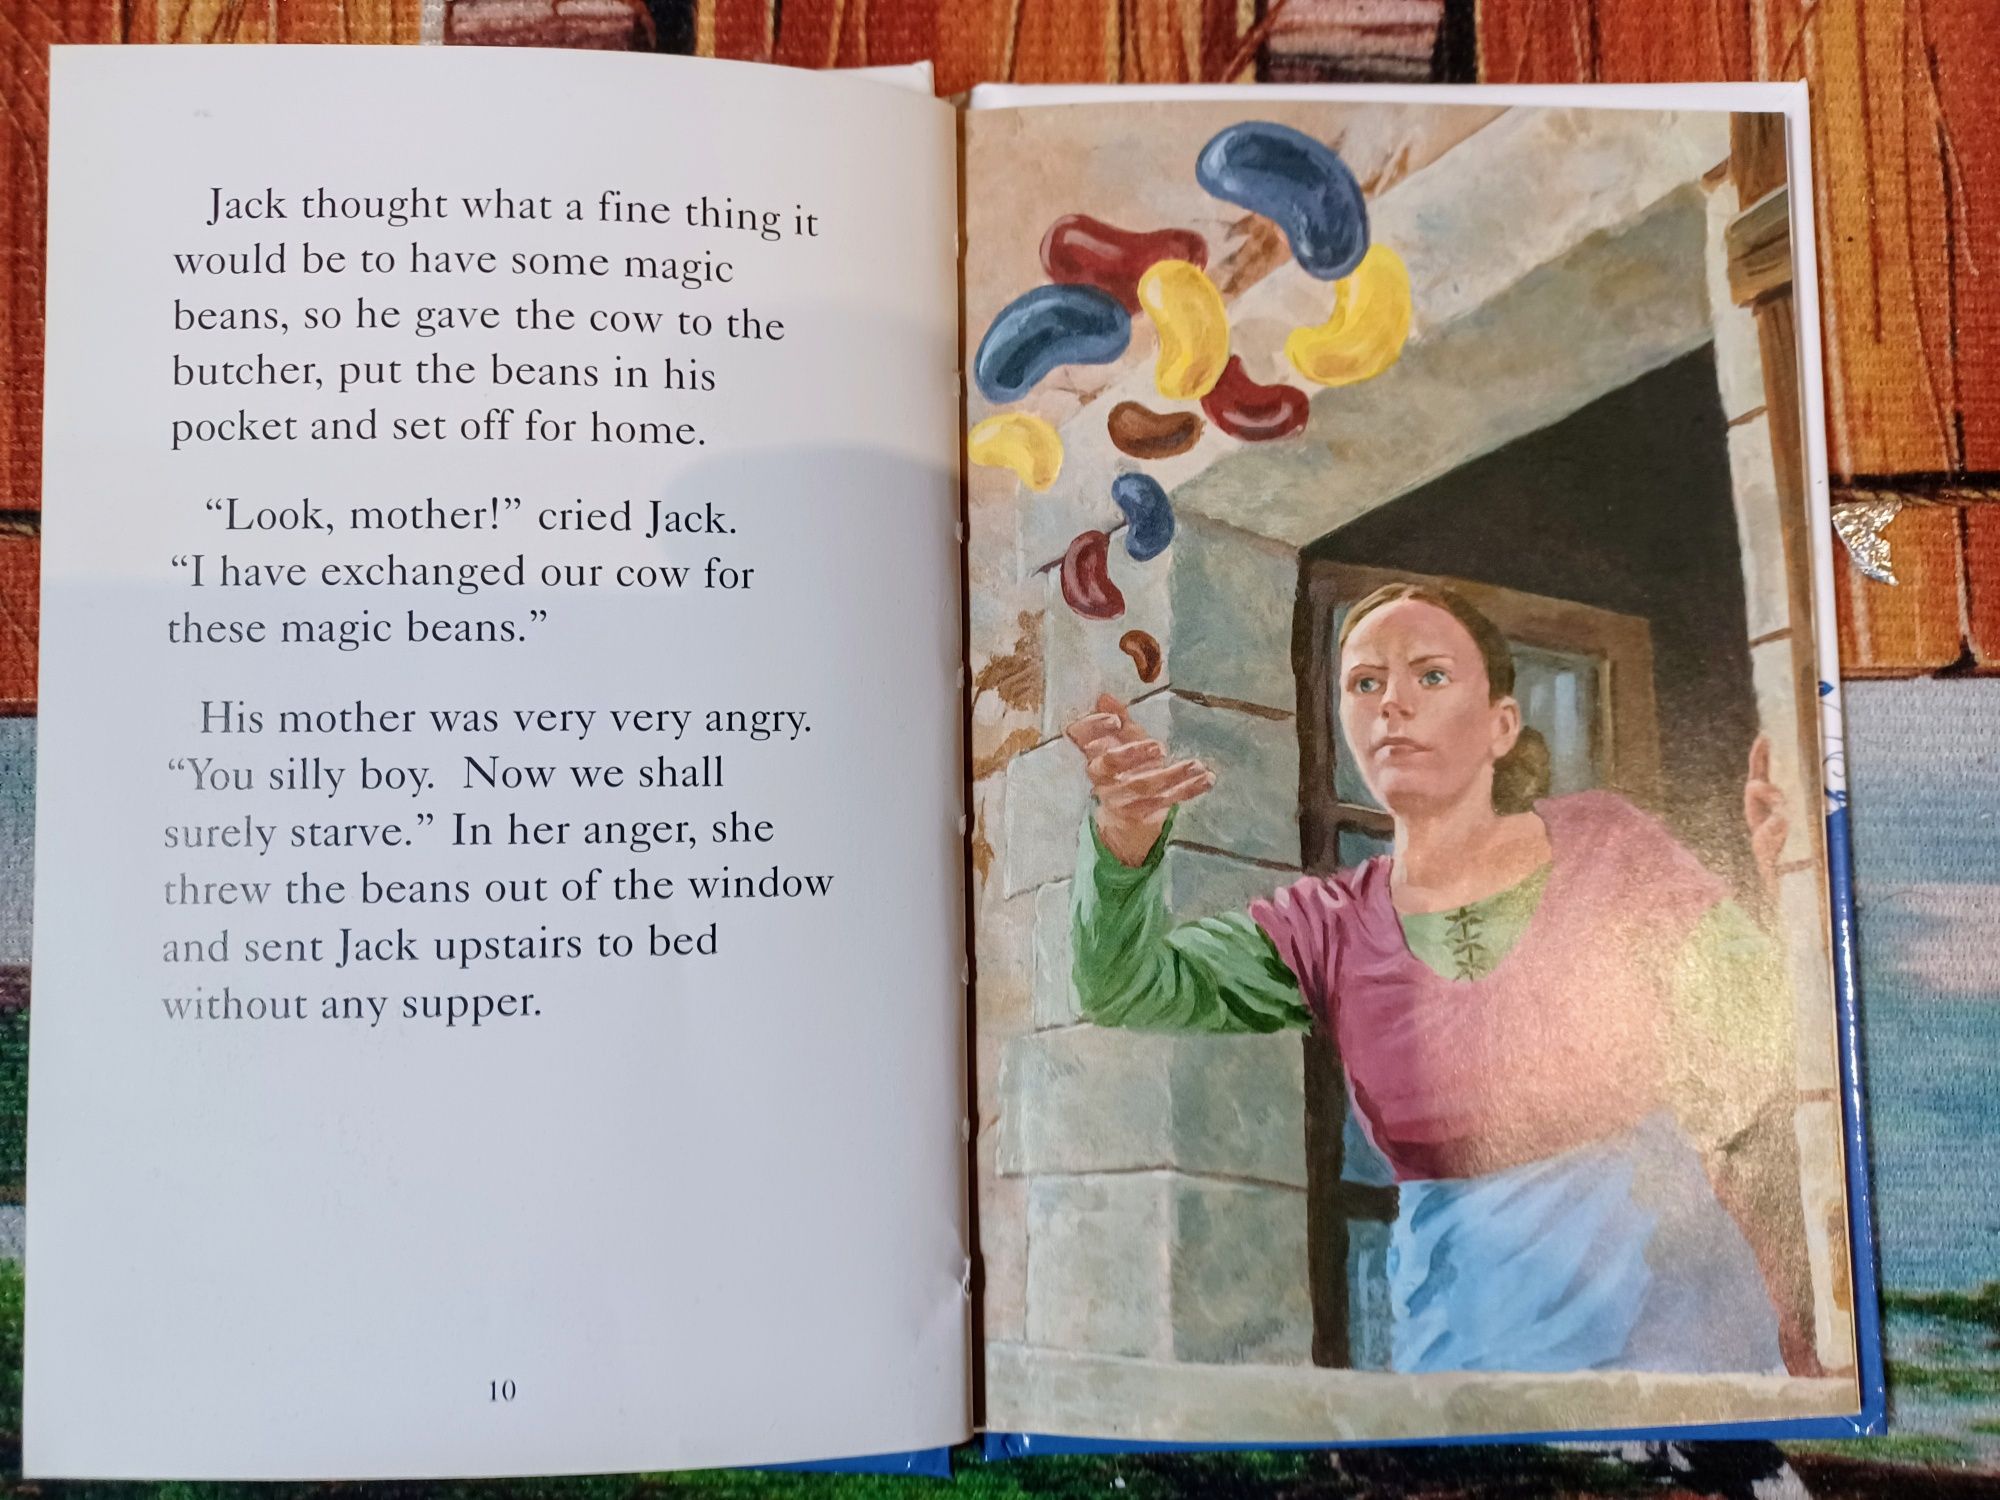 Jack & the beanstalk książka